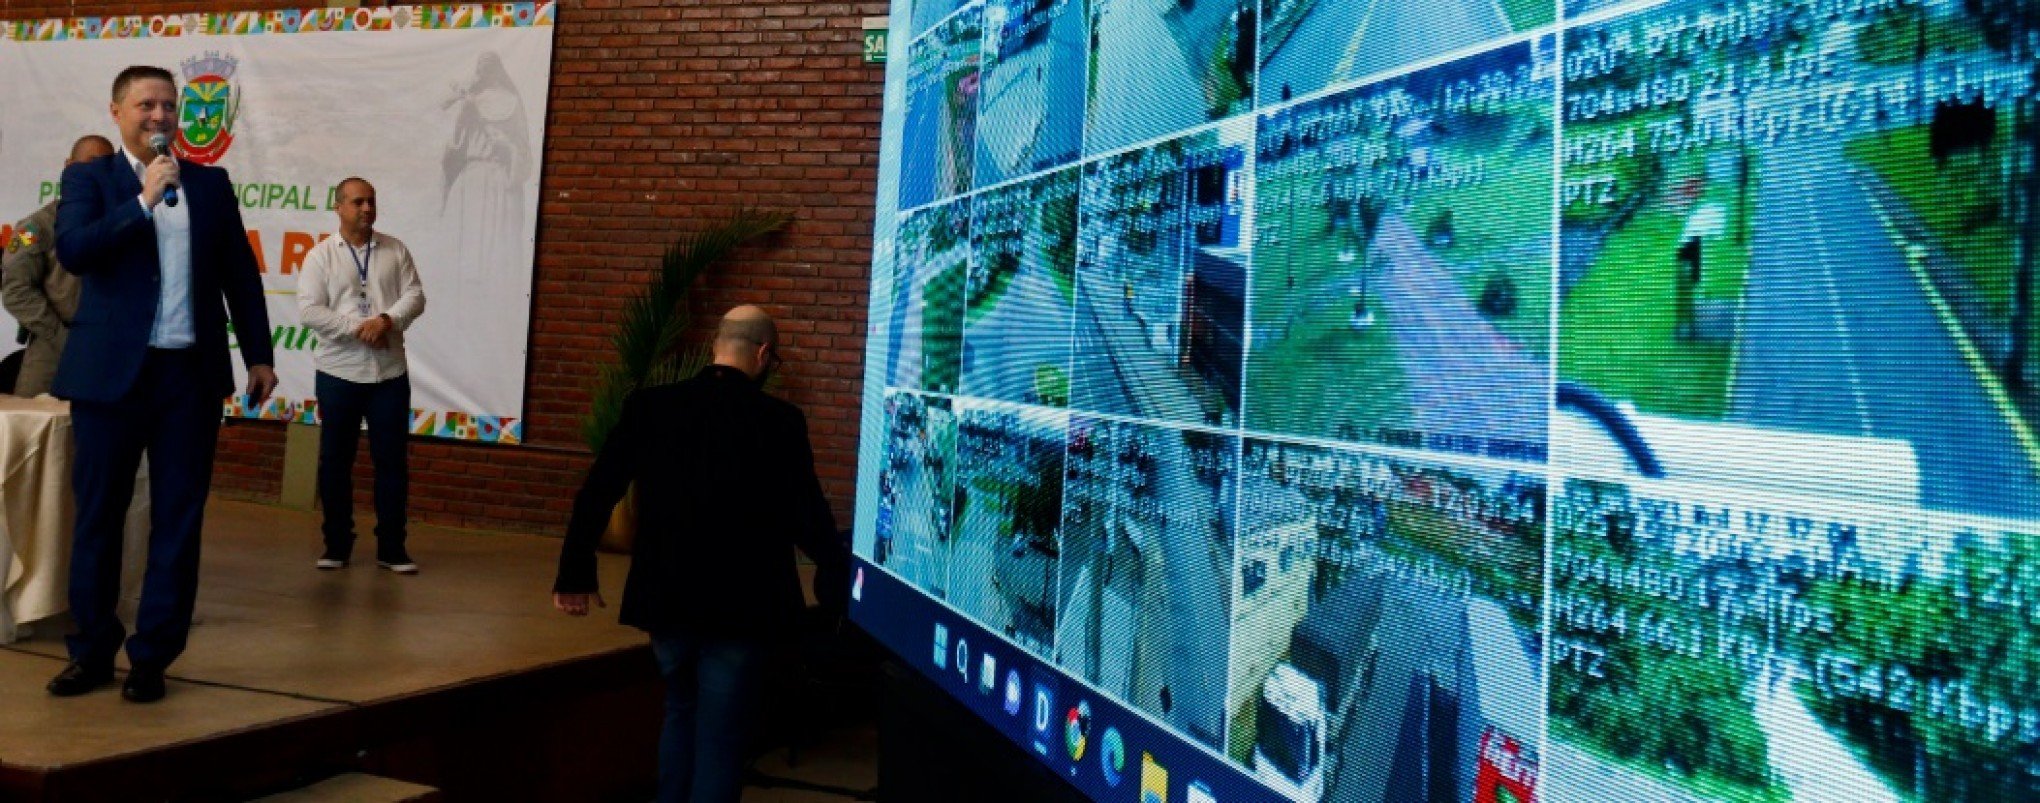 Prefeitura de Nova Santa Rita apresenta nova central de videomonitoramento da cidade